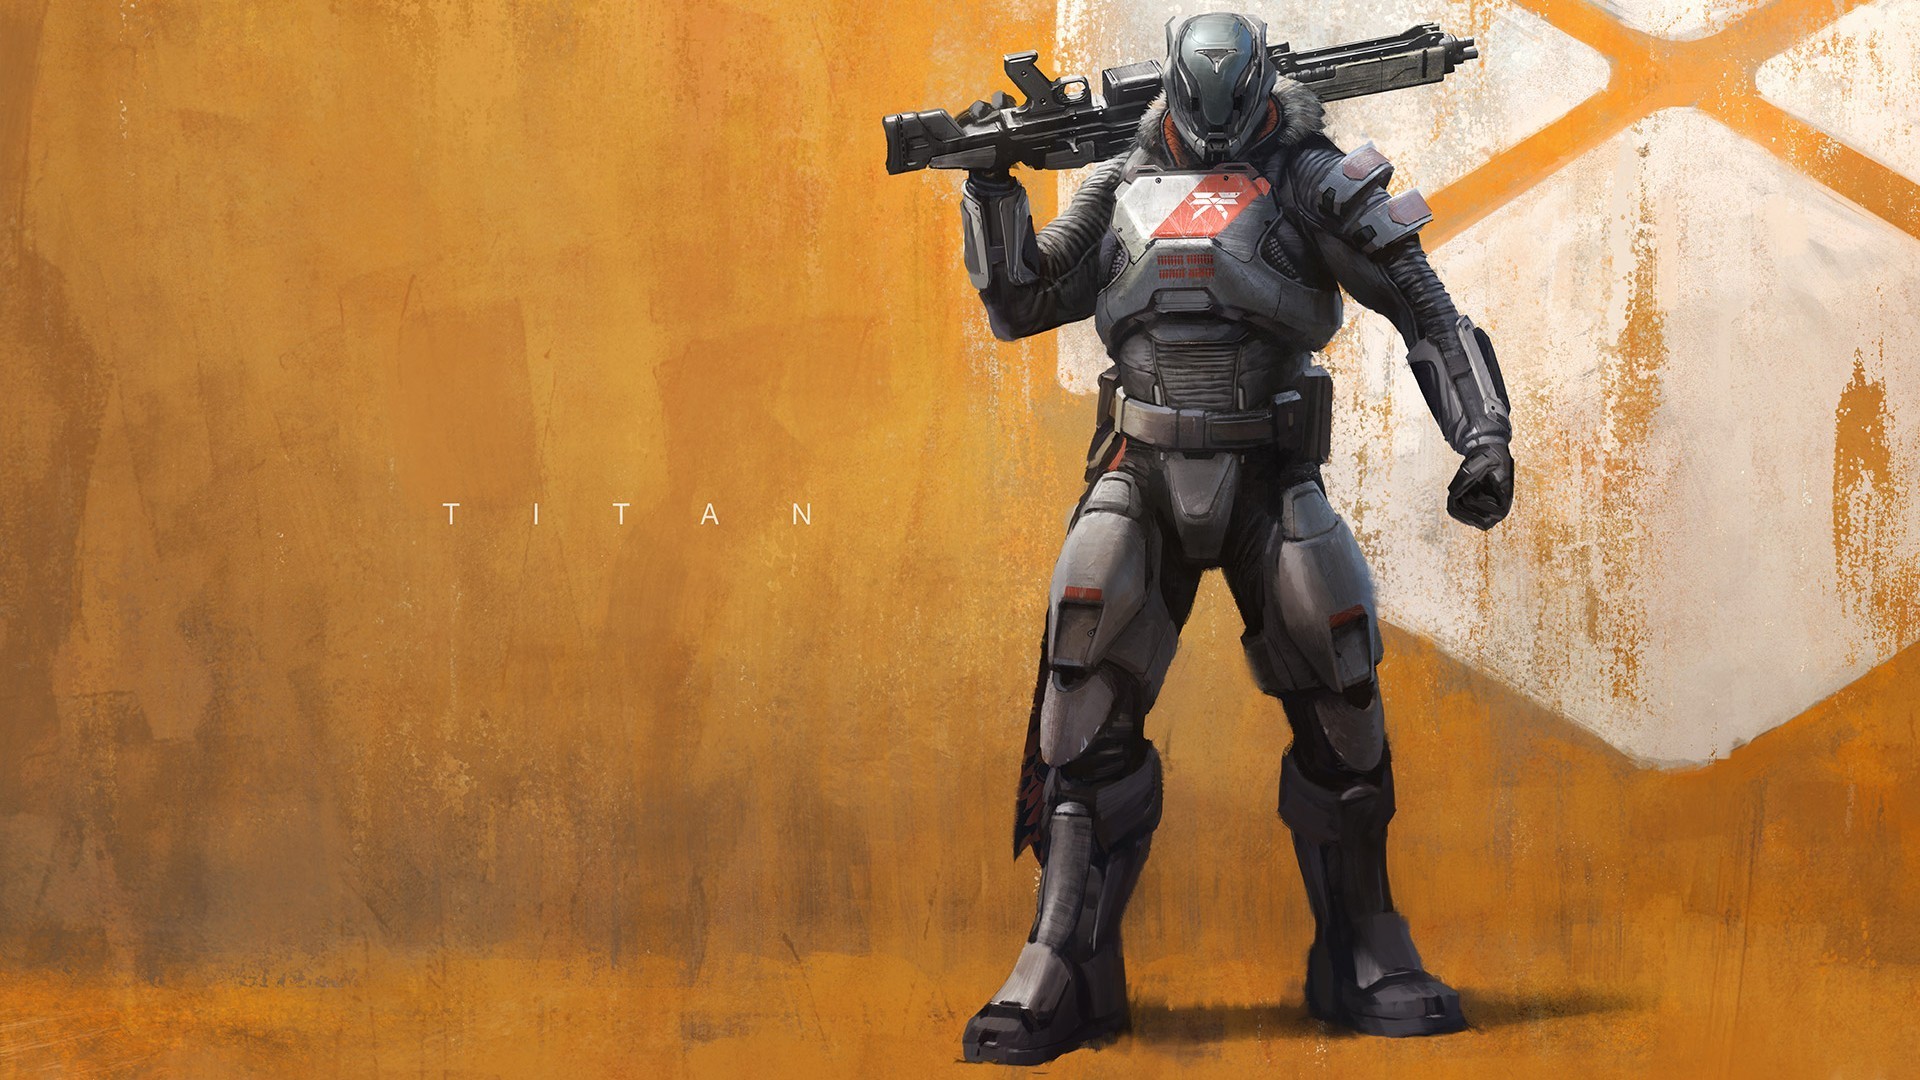 General 1920x1080 video games artwork Destiny (video game) Titan (Destiny)